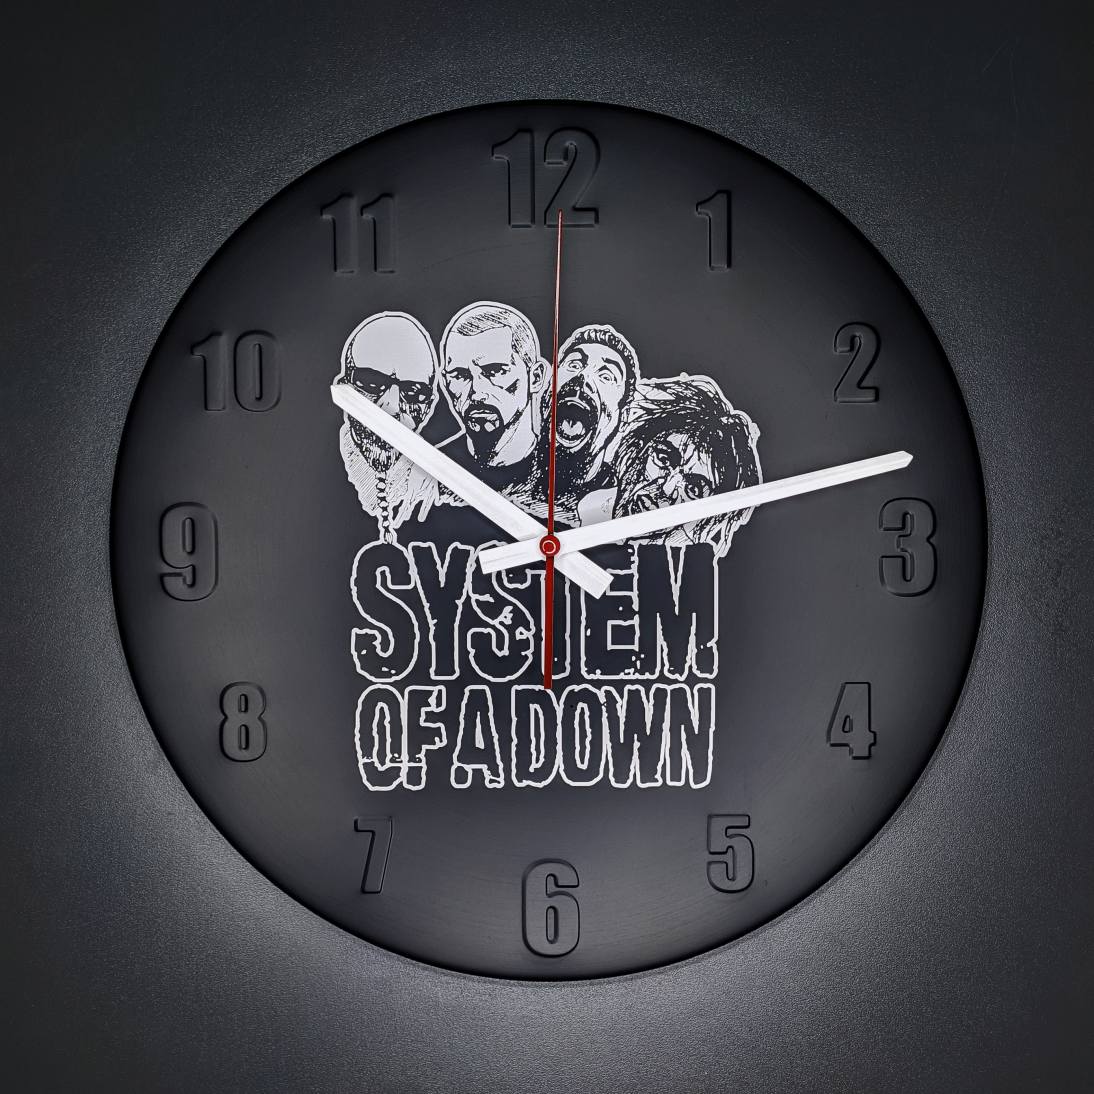 Nástenné hodiny "System of a Down"